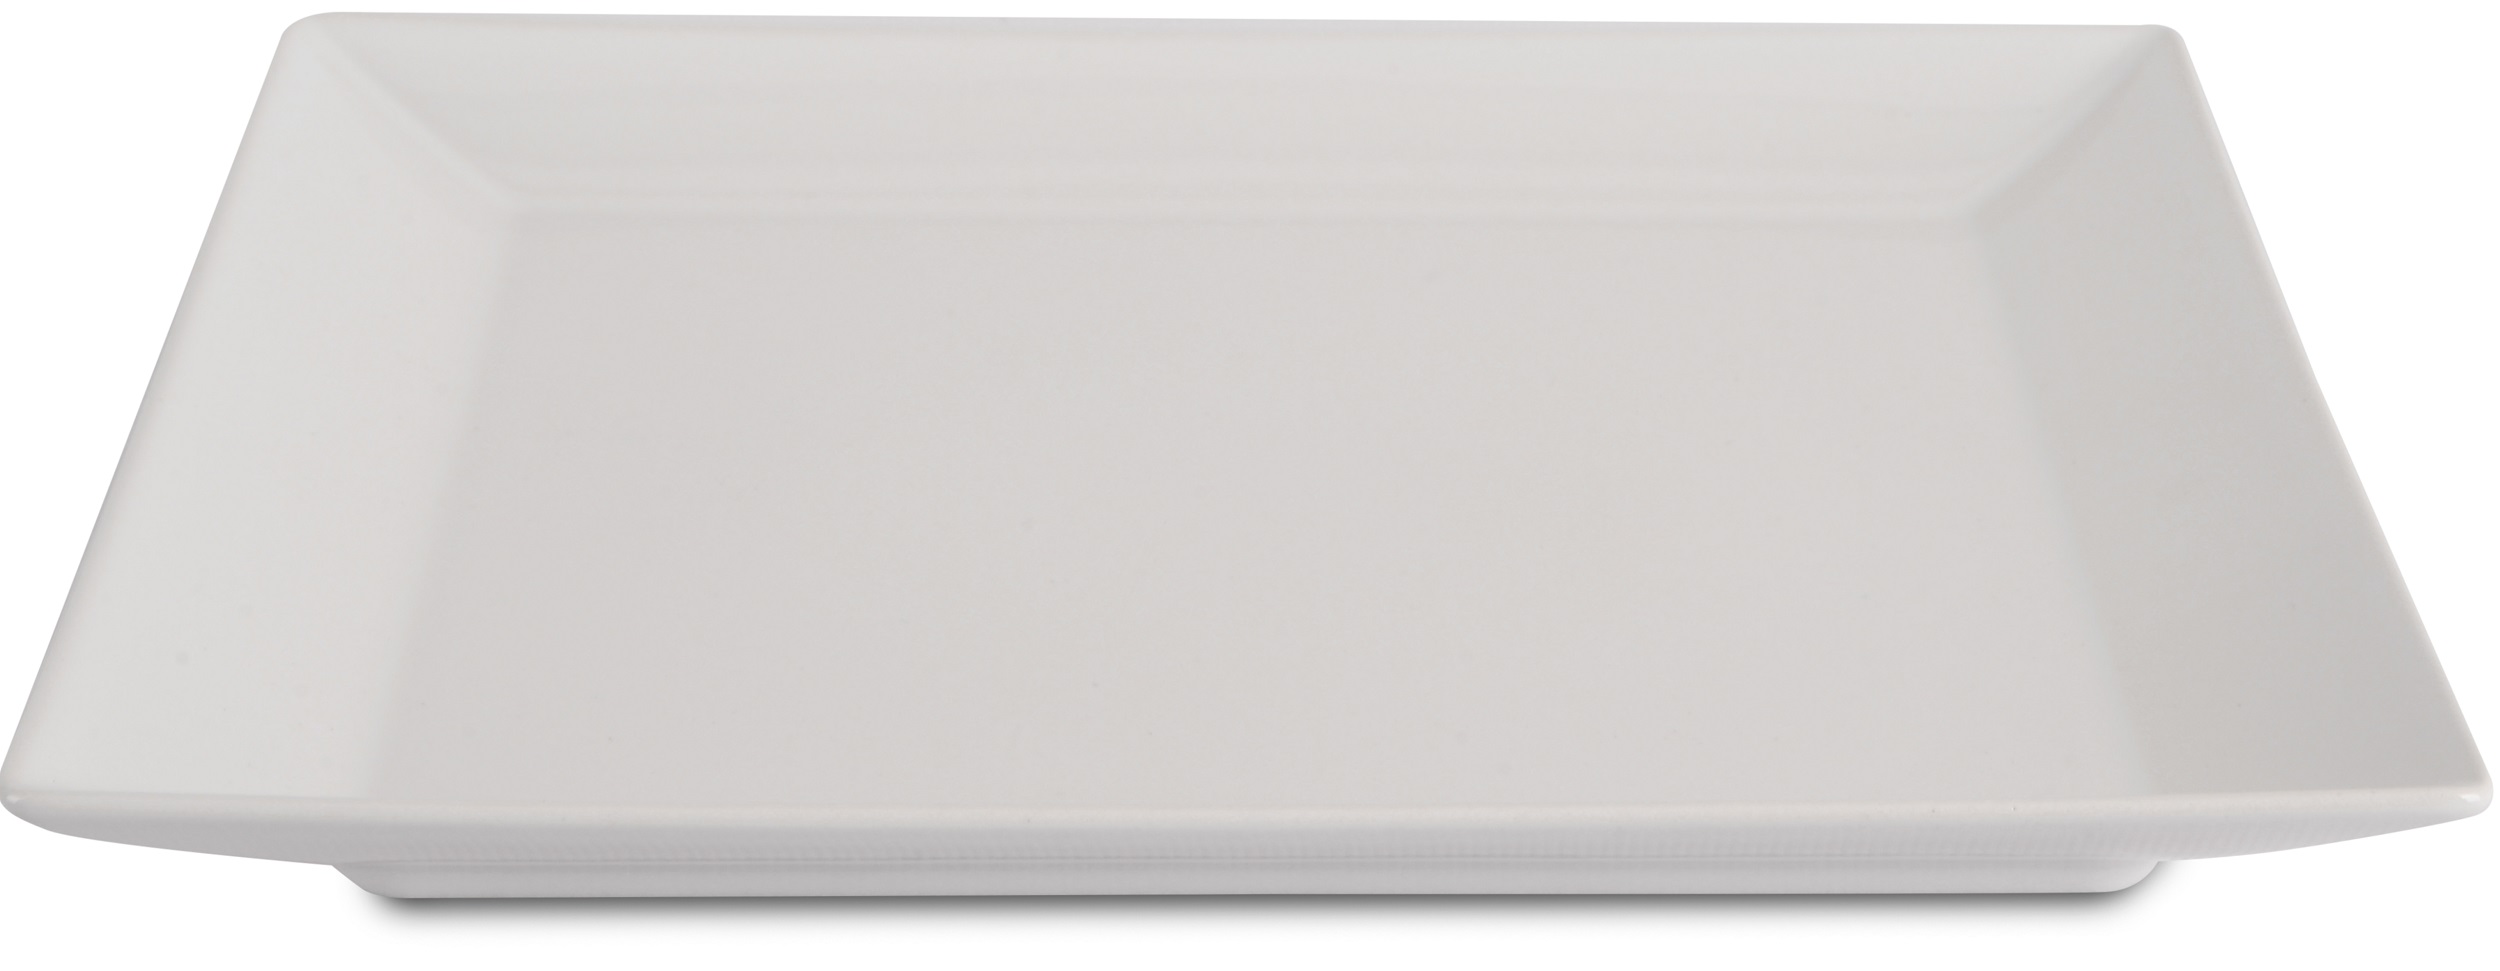 Тарілка квадратна білий глянець IPEC 30902843 TOKYO 26 см